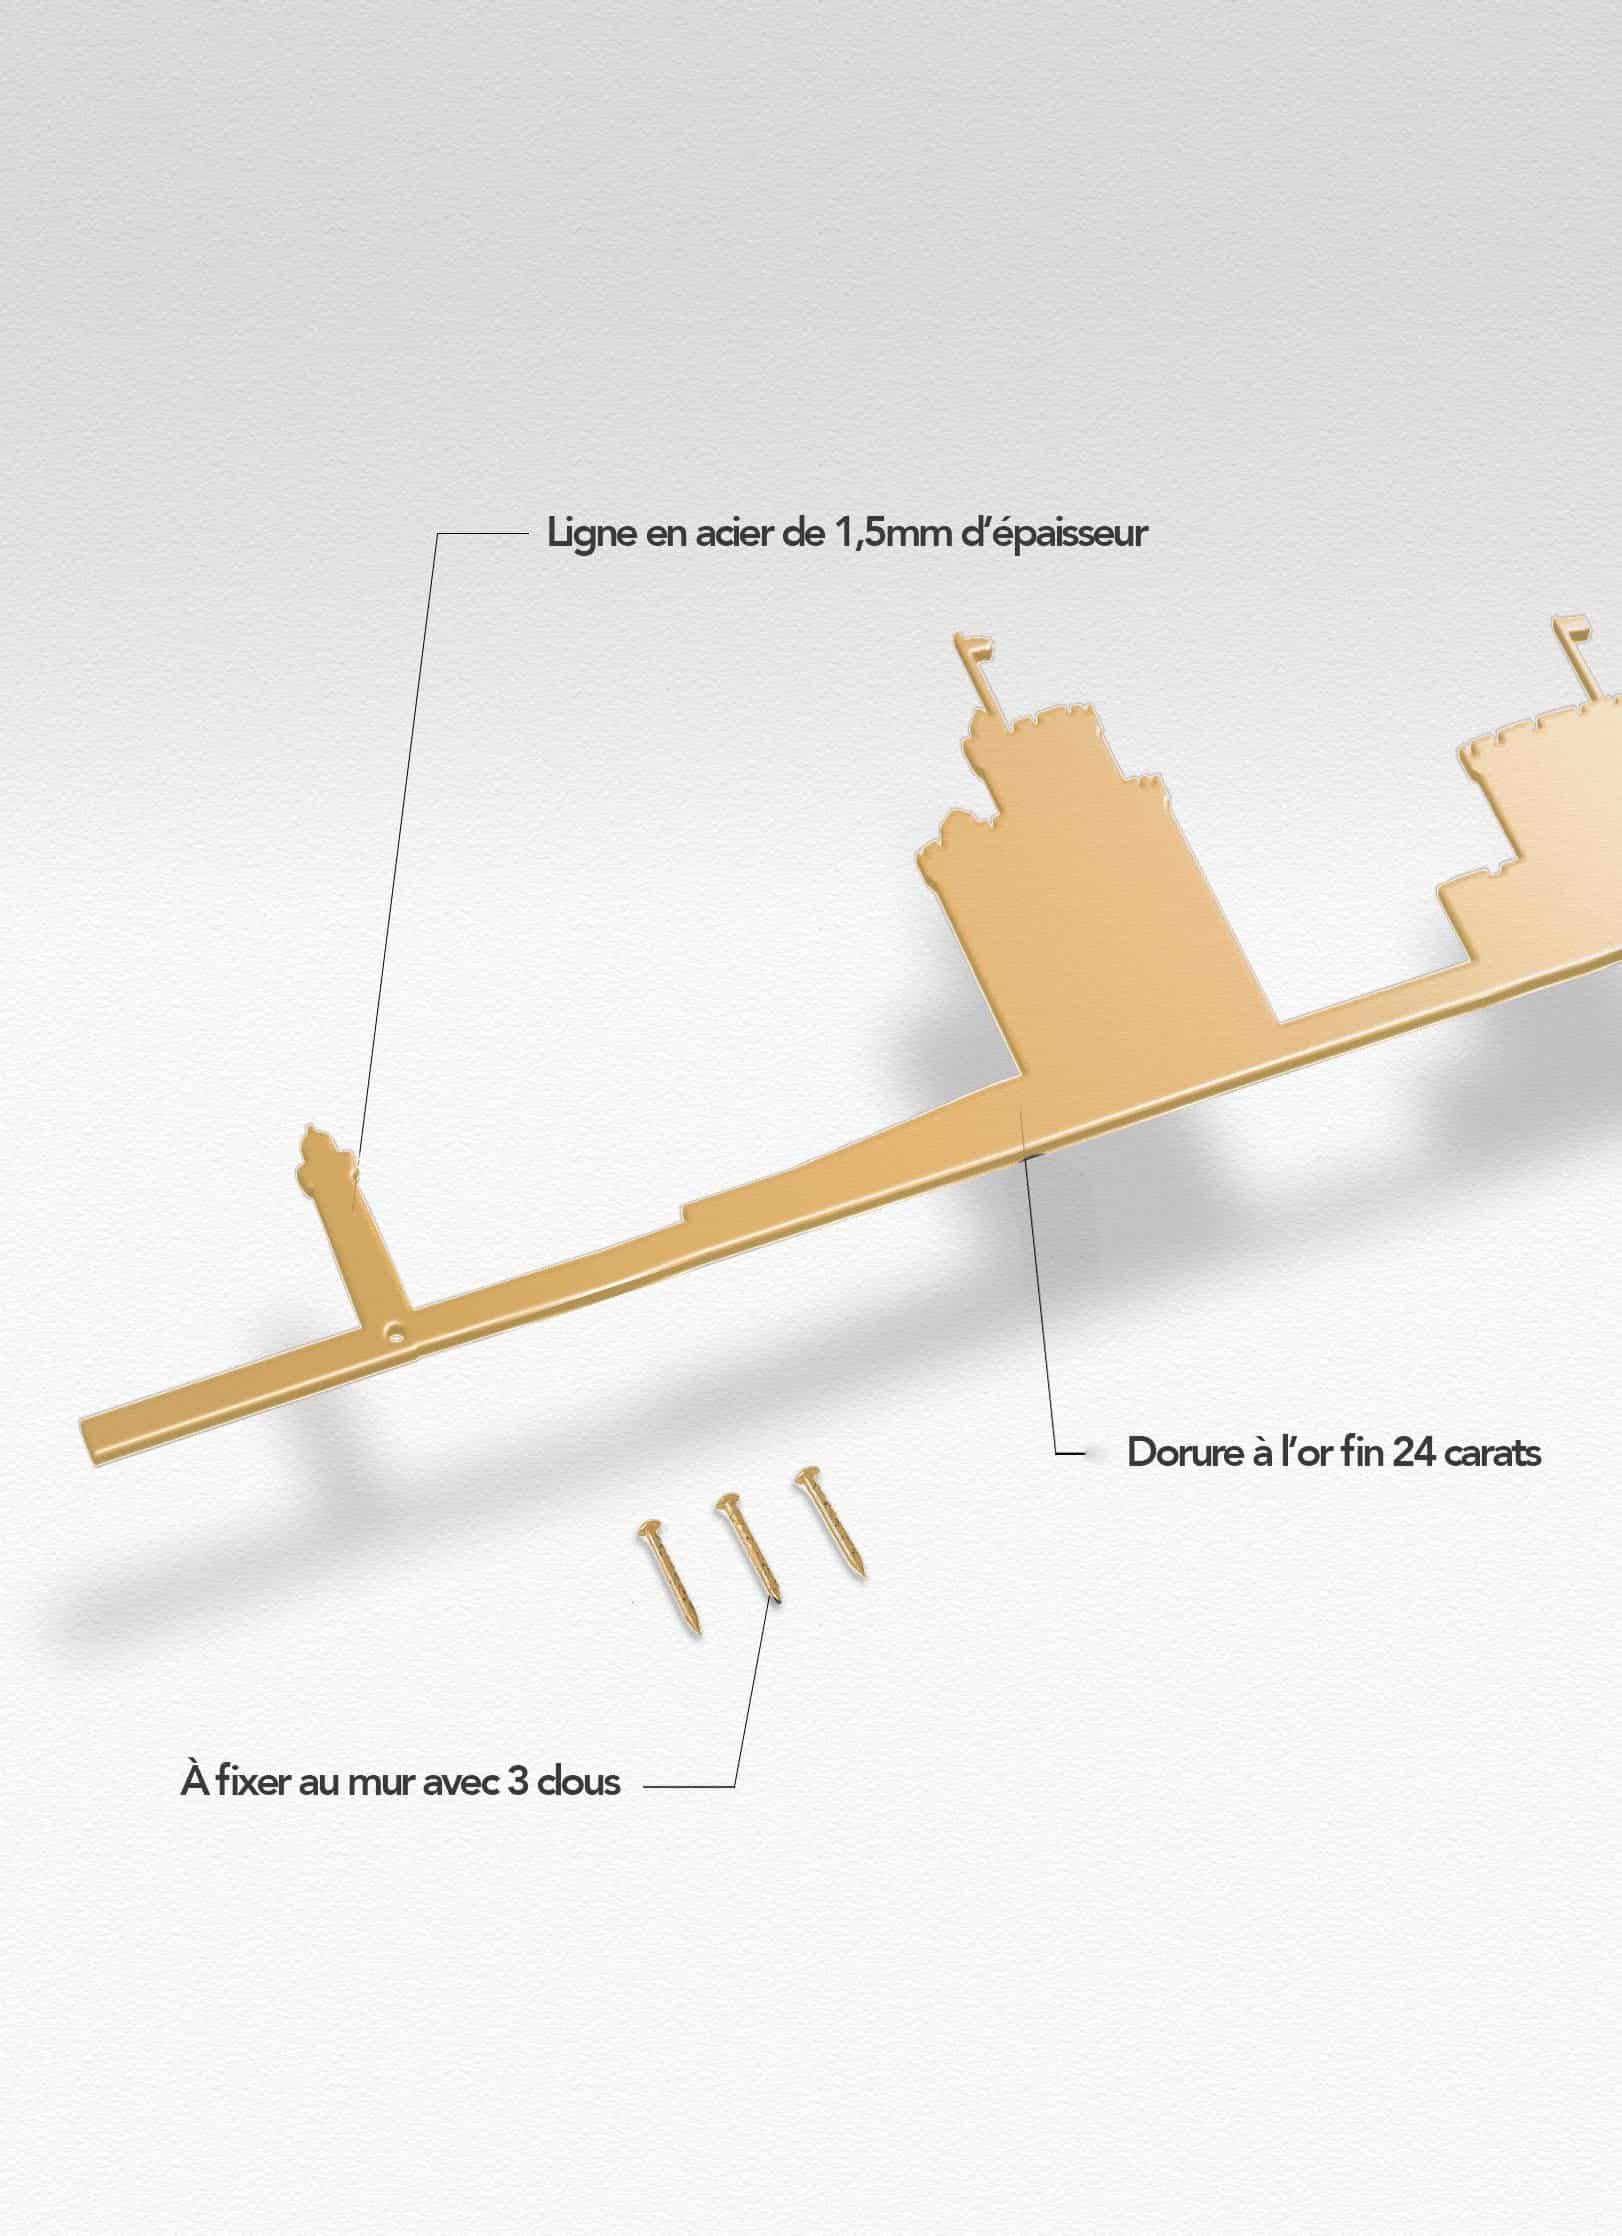 Presentation of the skyline of La Rochelle doré